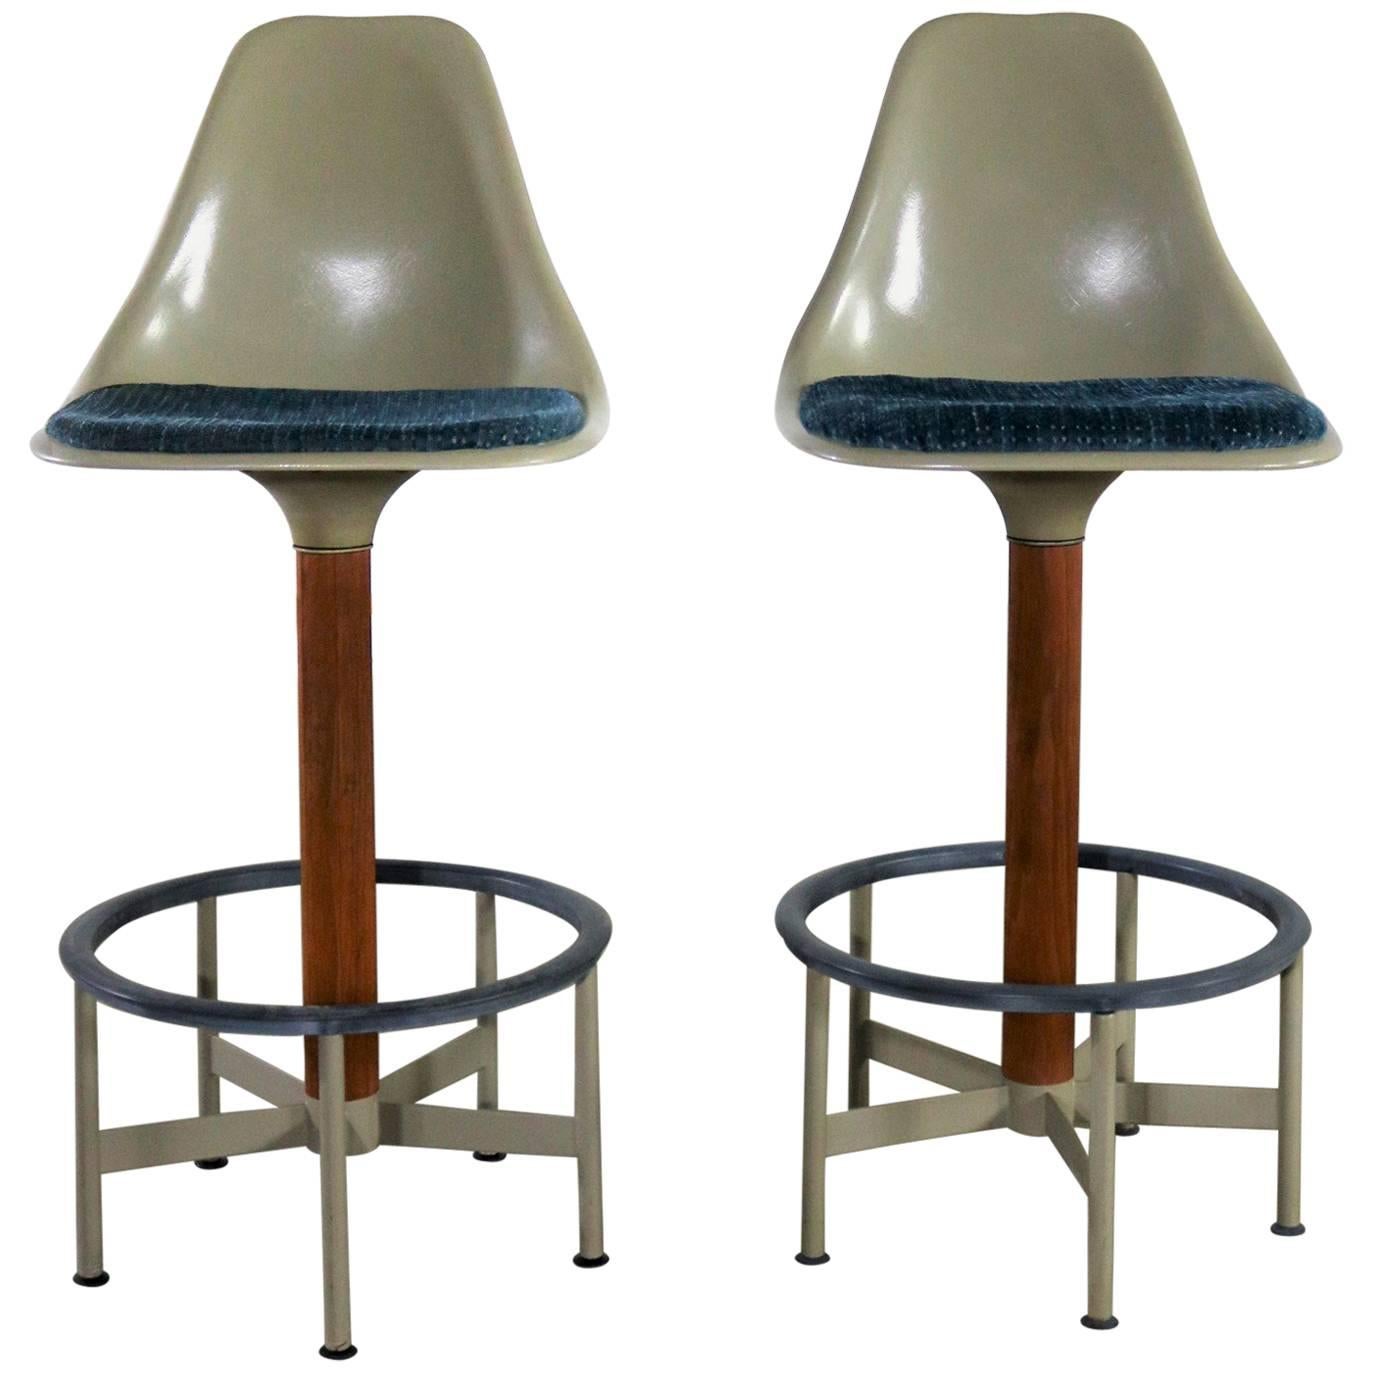 Pair of Burke Swivel Bar Stools Mid-Century Modern Fiberglass Shell Fabric Seat